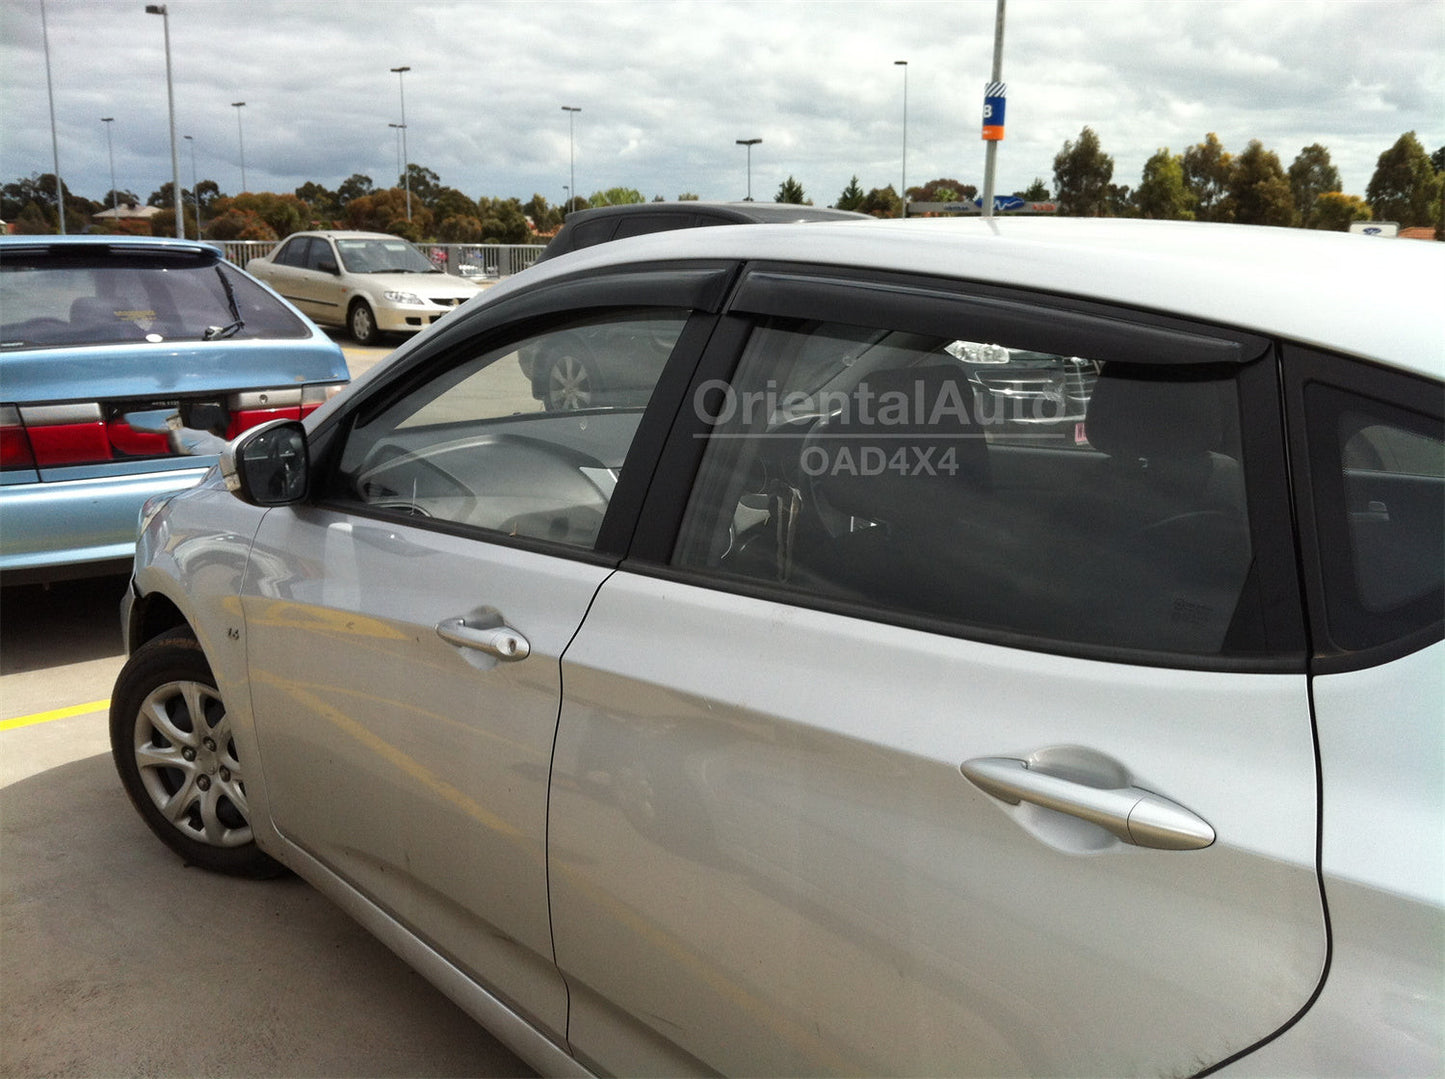 Premium Weathershields Weather Shields Window Visor For Hyundai Accent Hatch 2011-Onwards